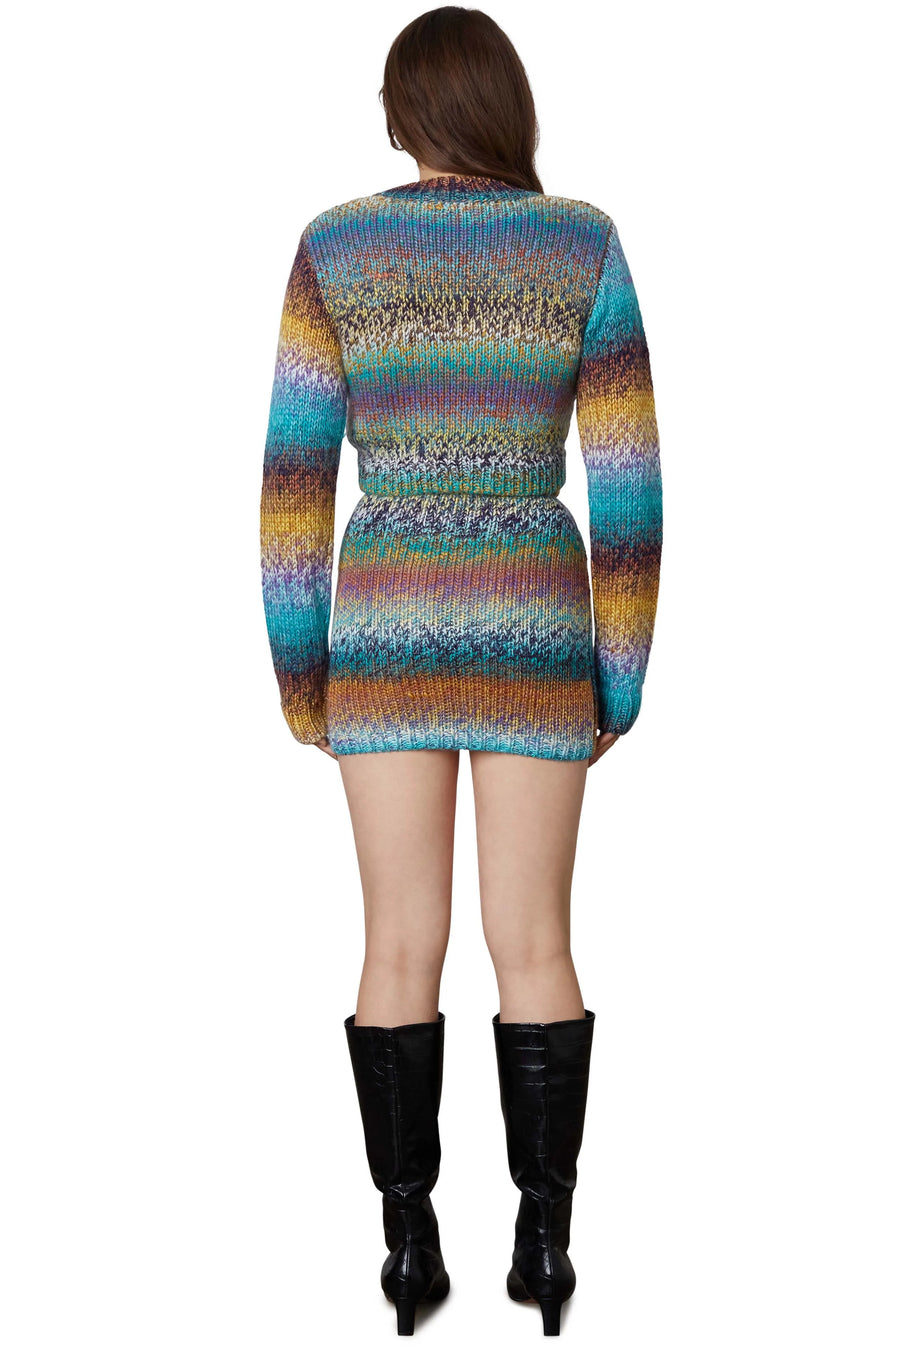 NIA Aspen Sweater Skirt Teal/Brown